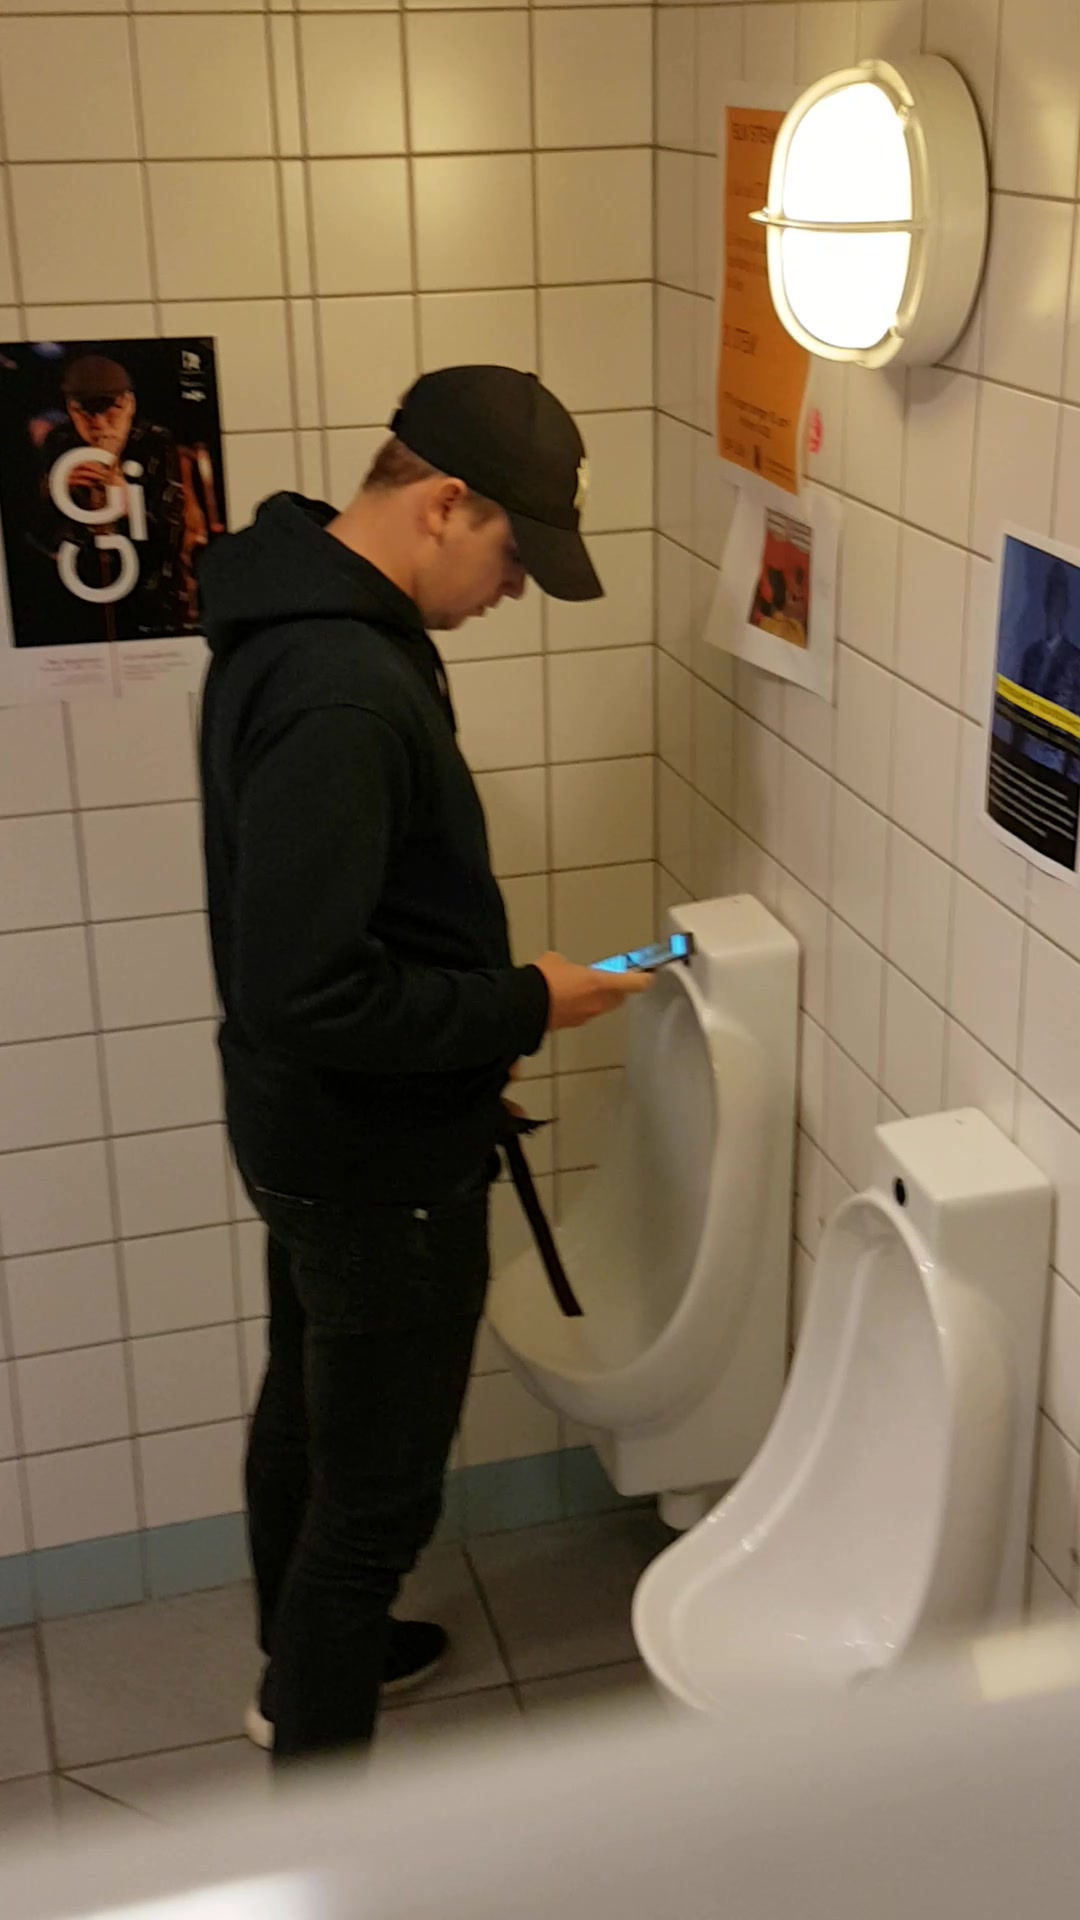 Spy at urinal